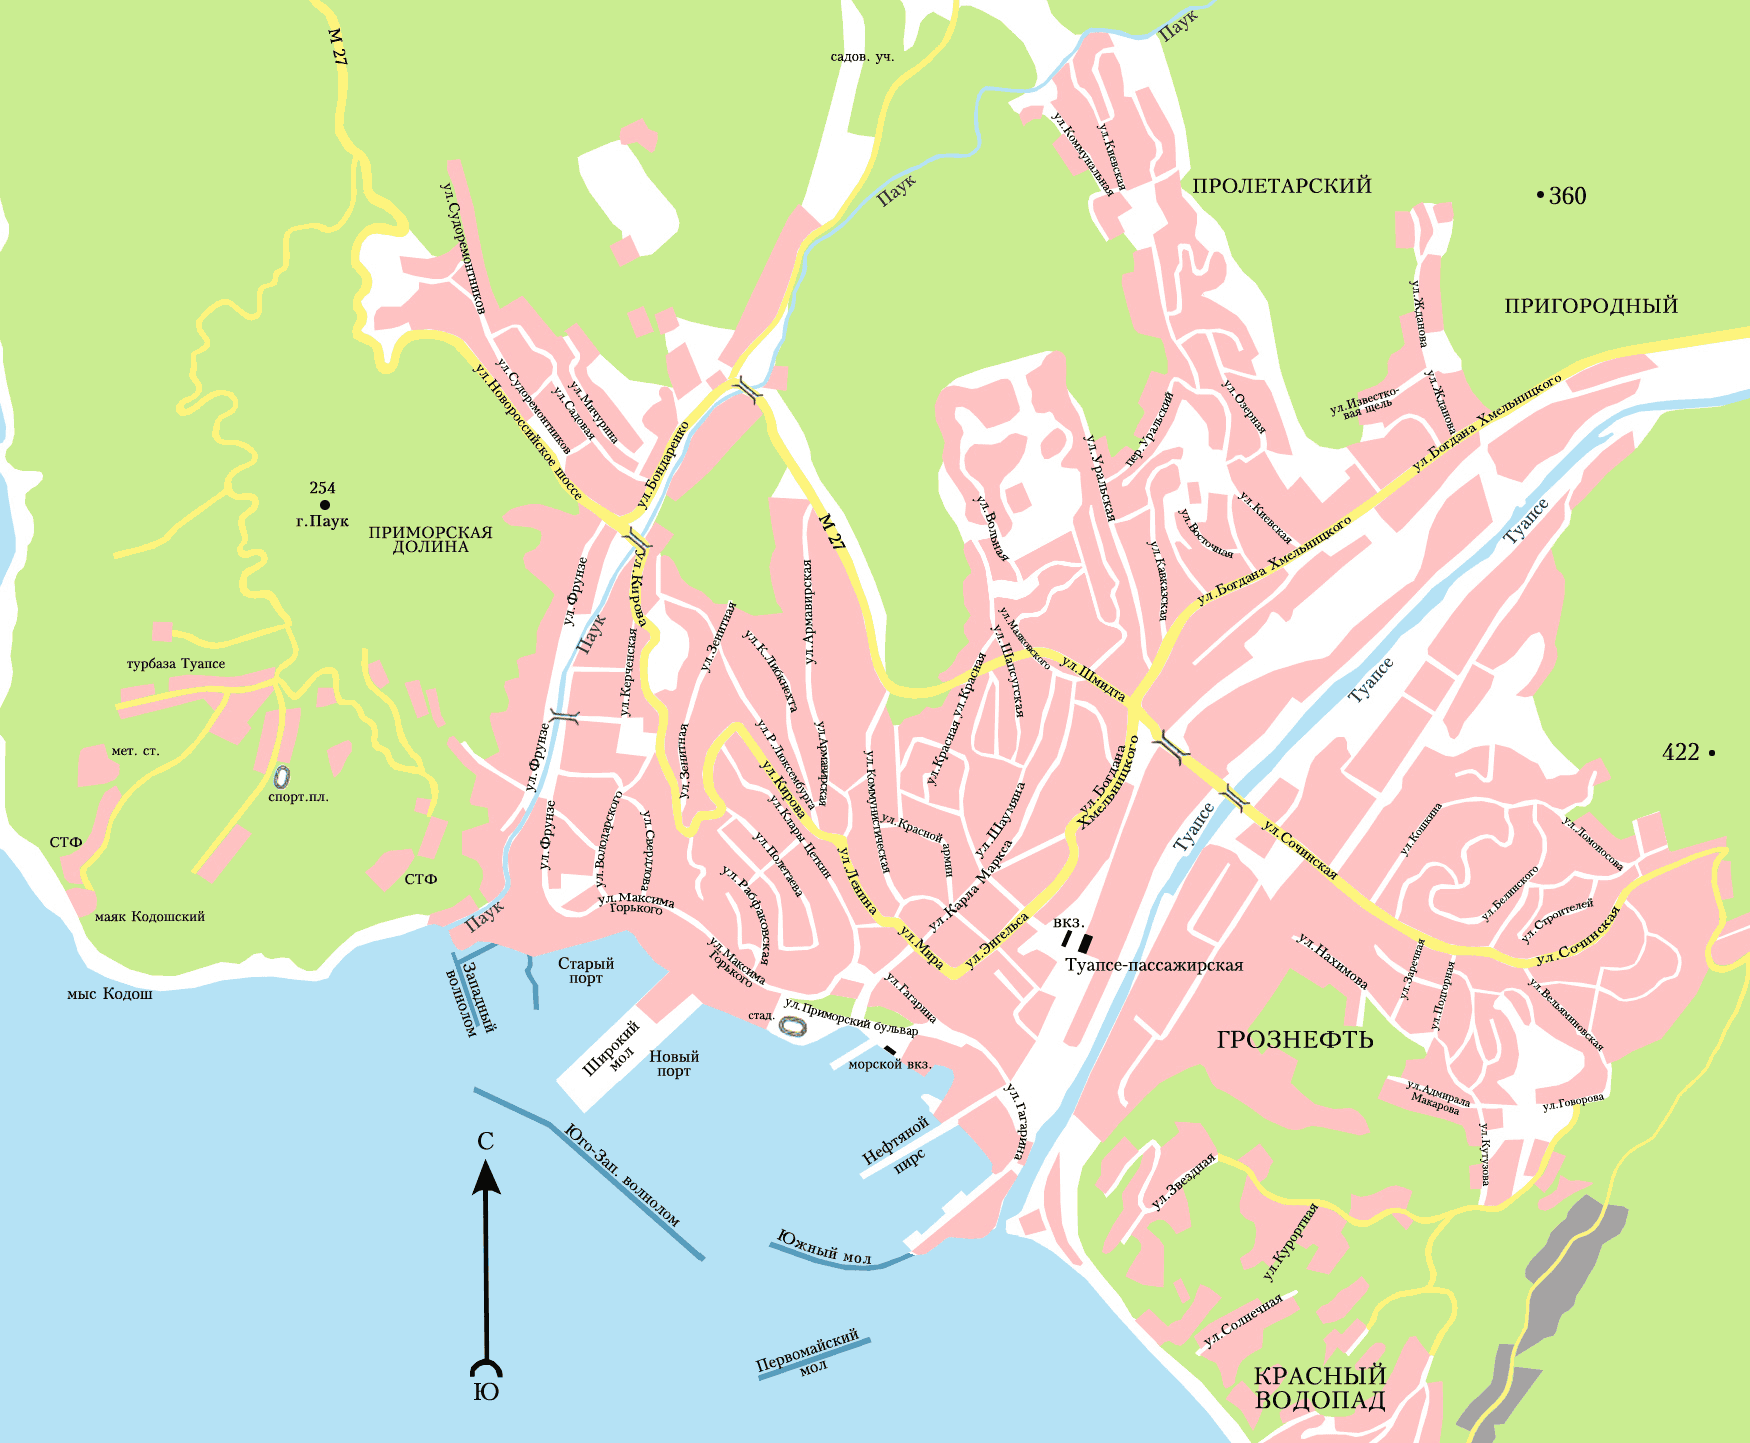 Map of Tuapse